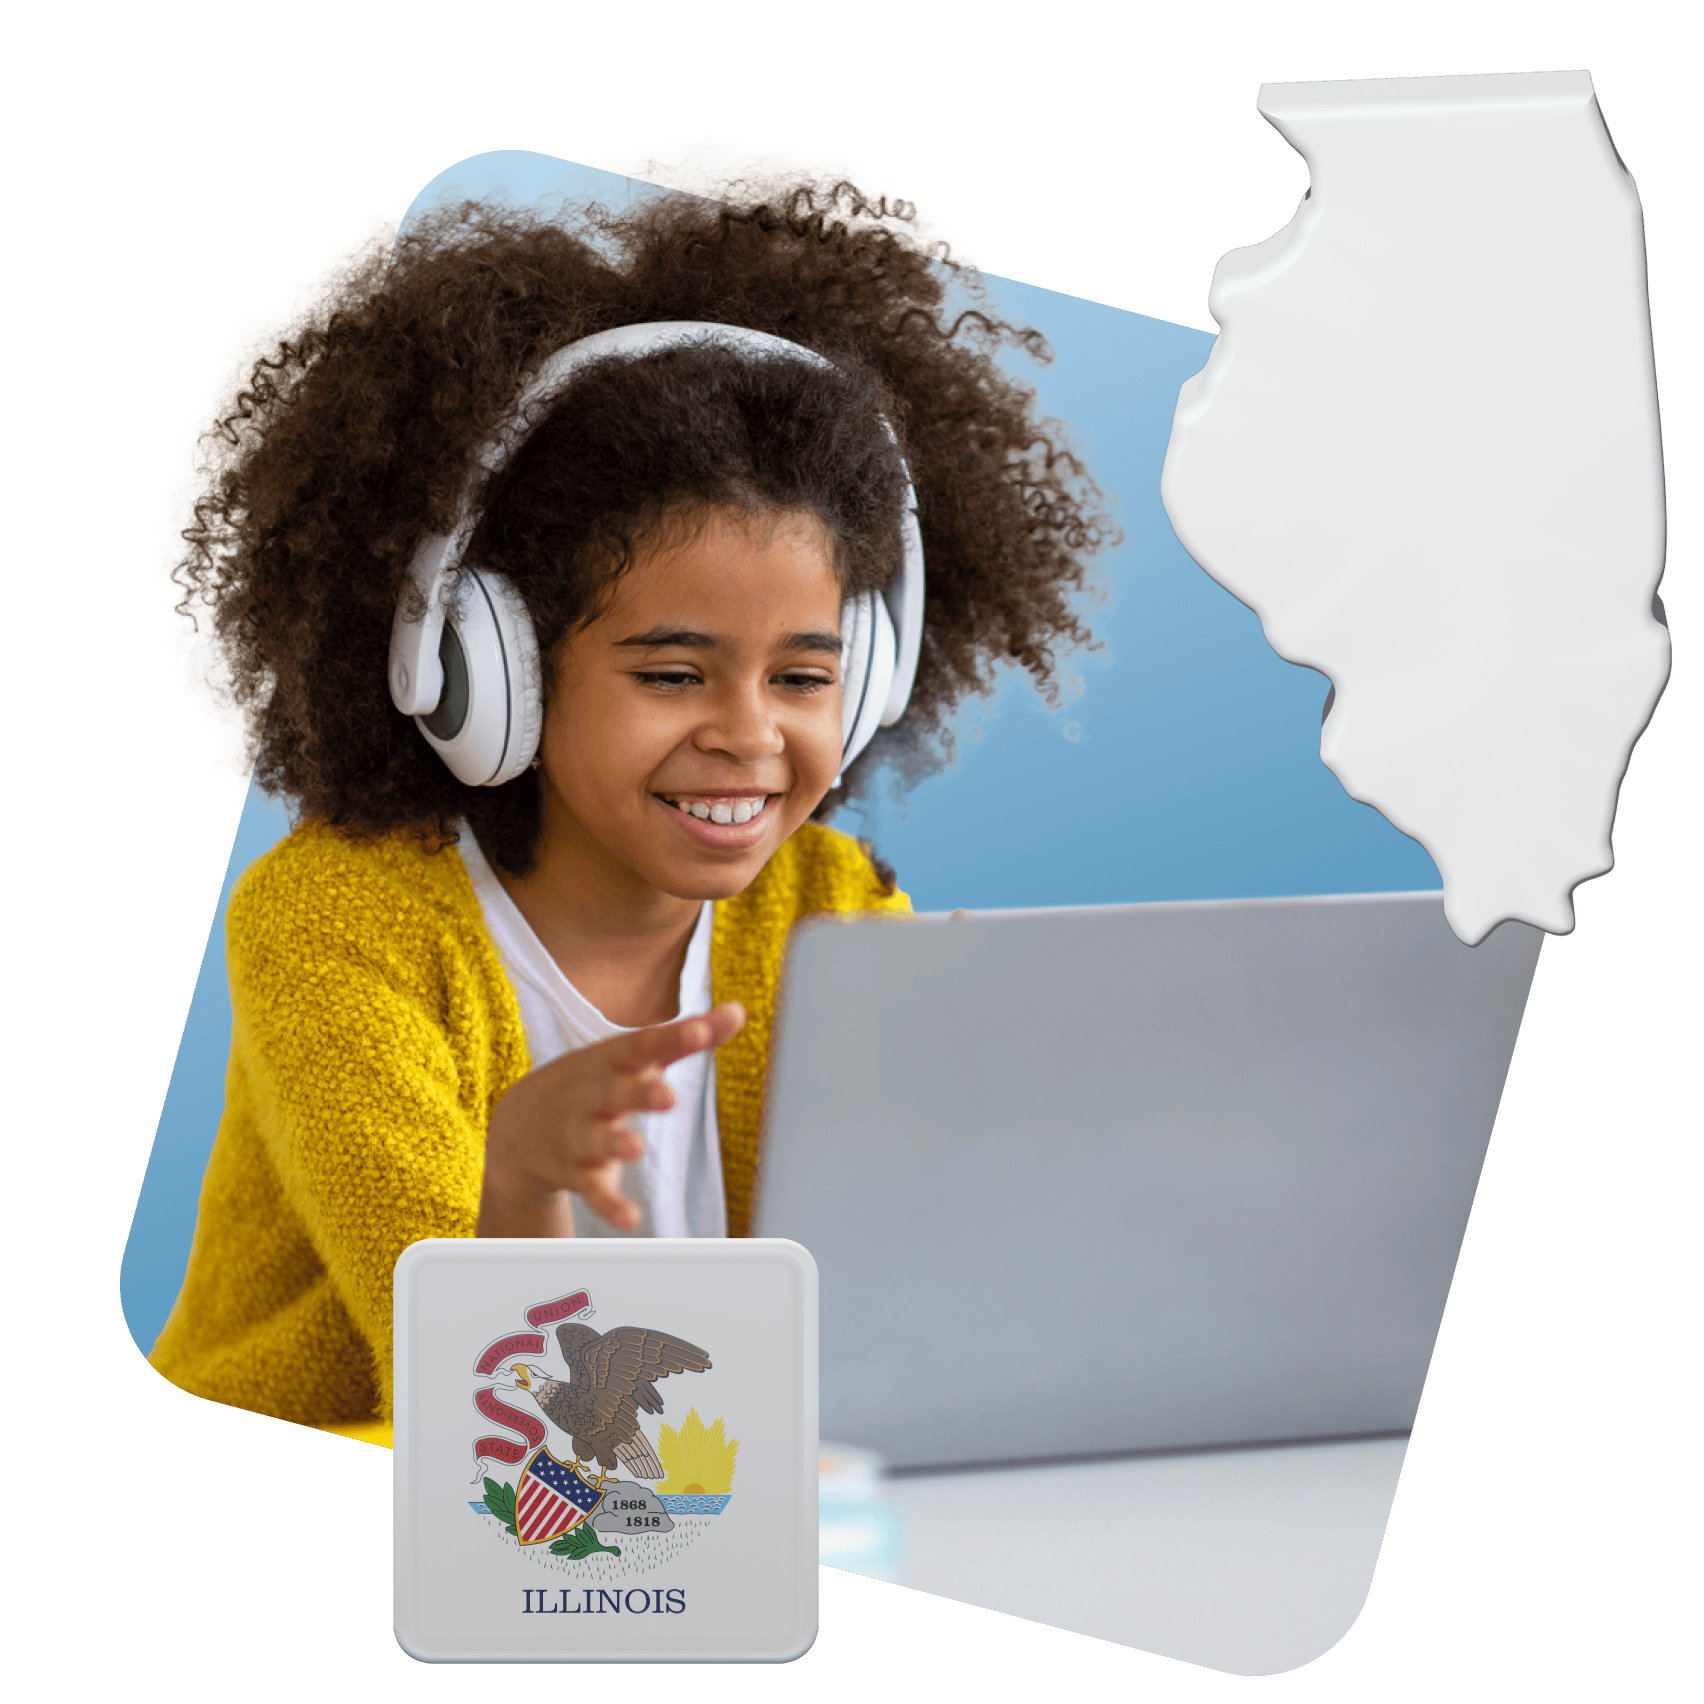 Illinois Online Schools image 2 (name StatePage Illinois 1)